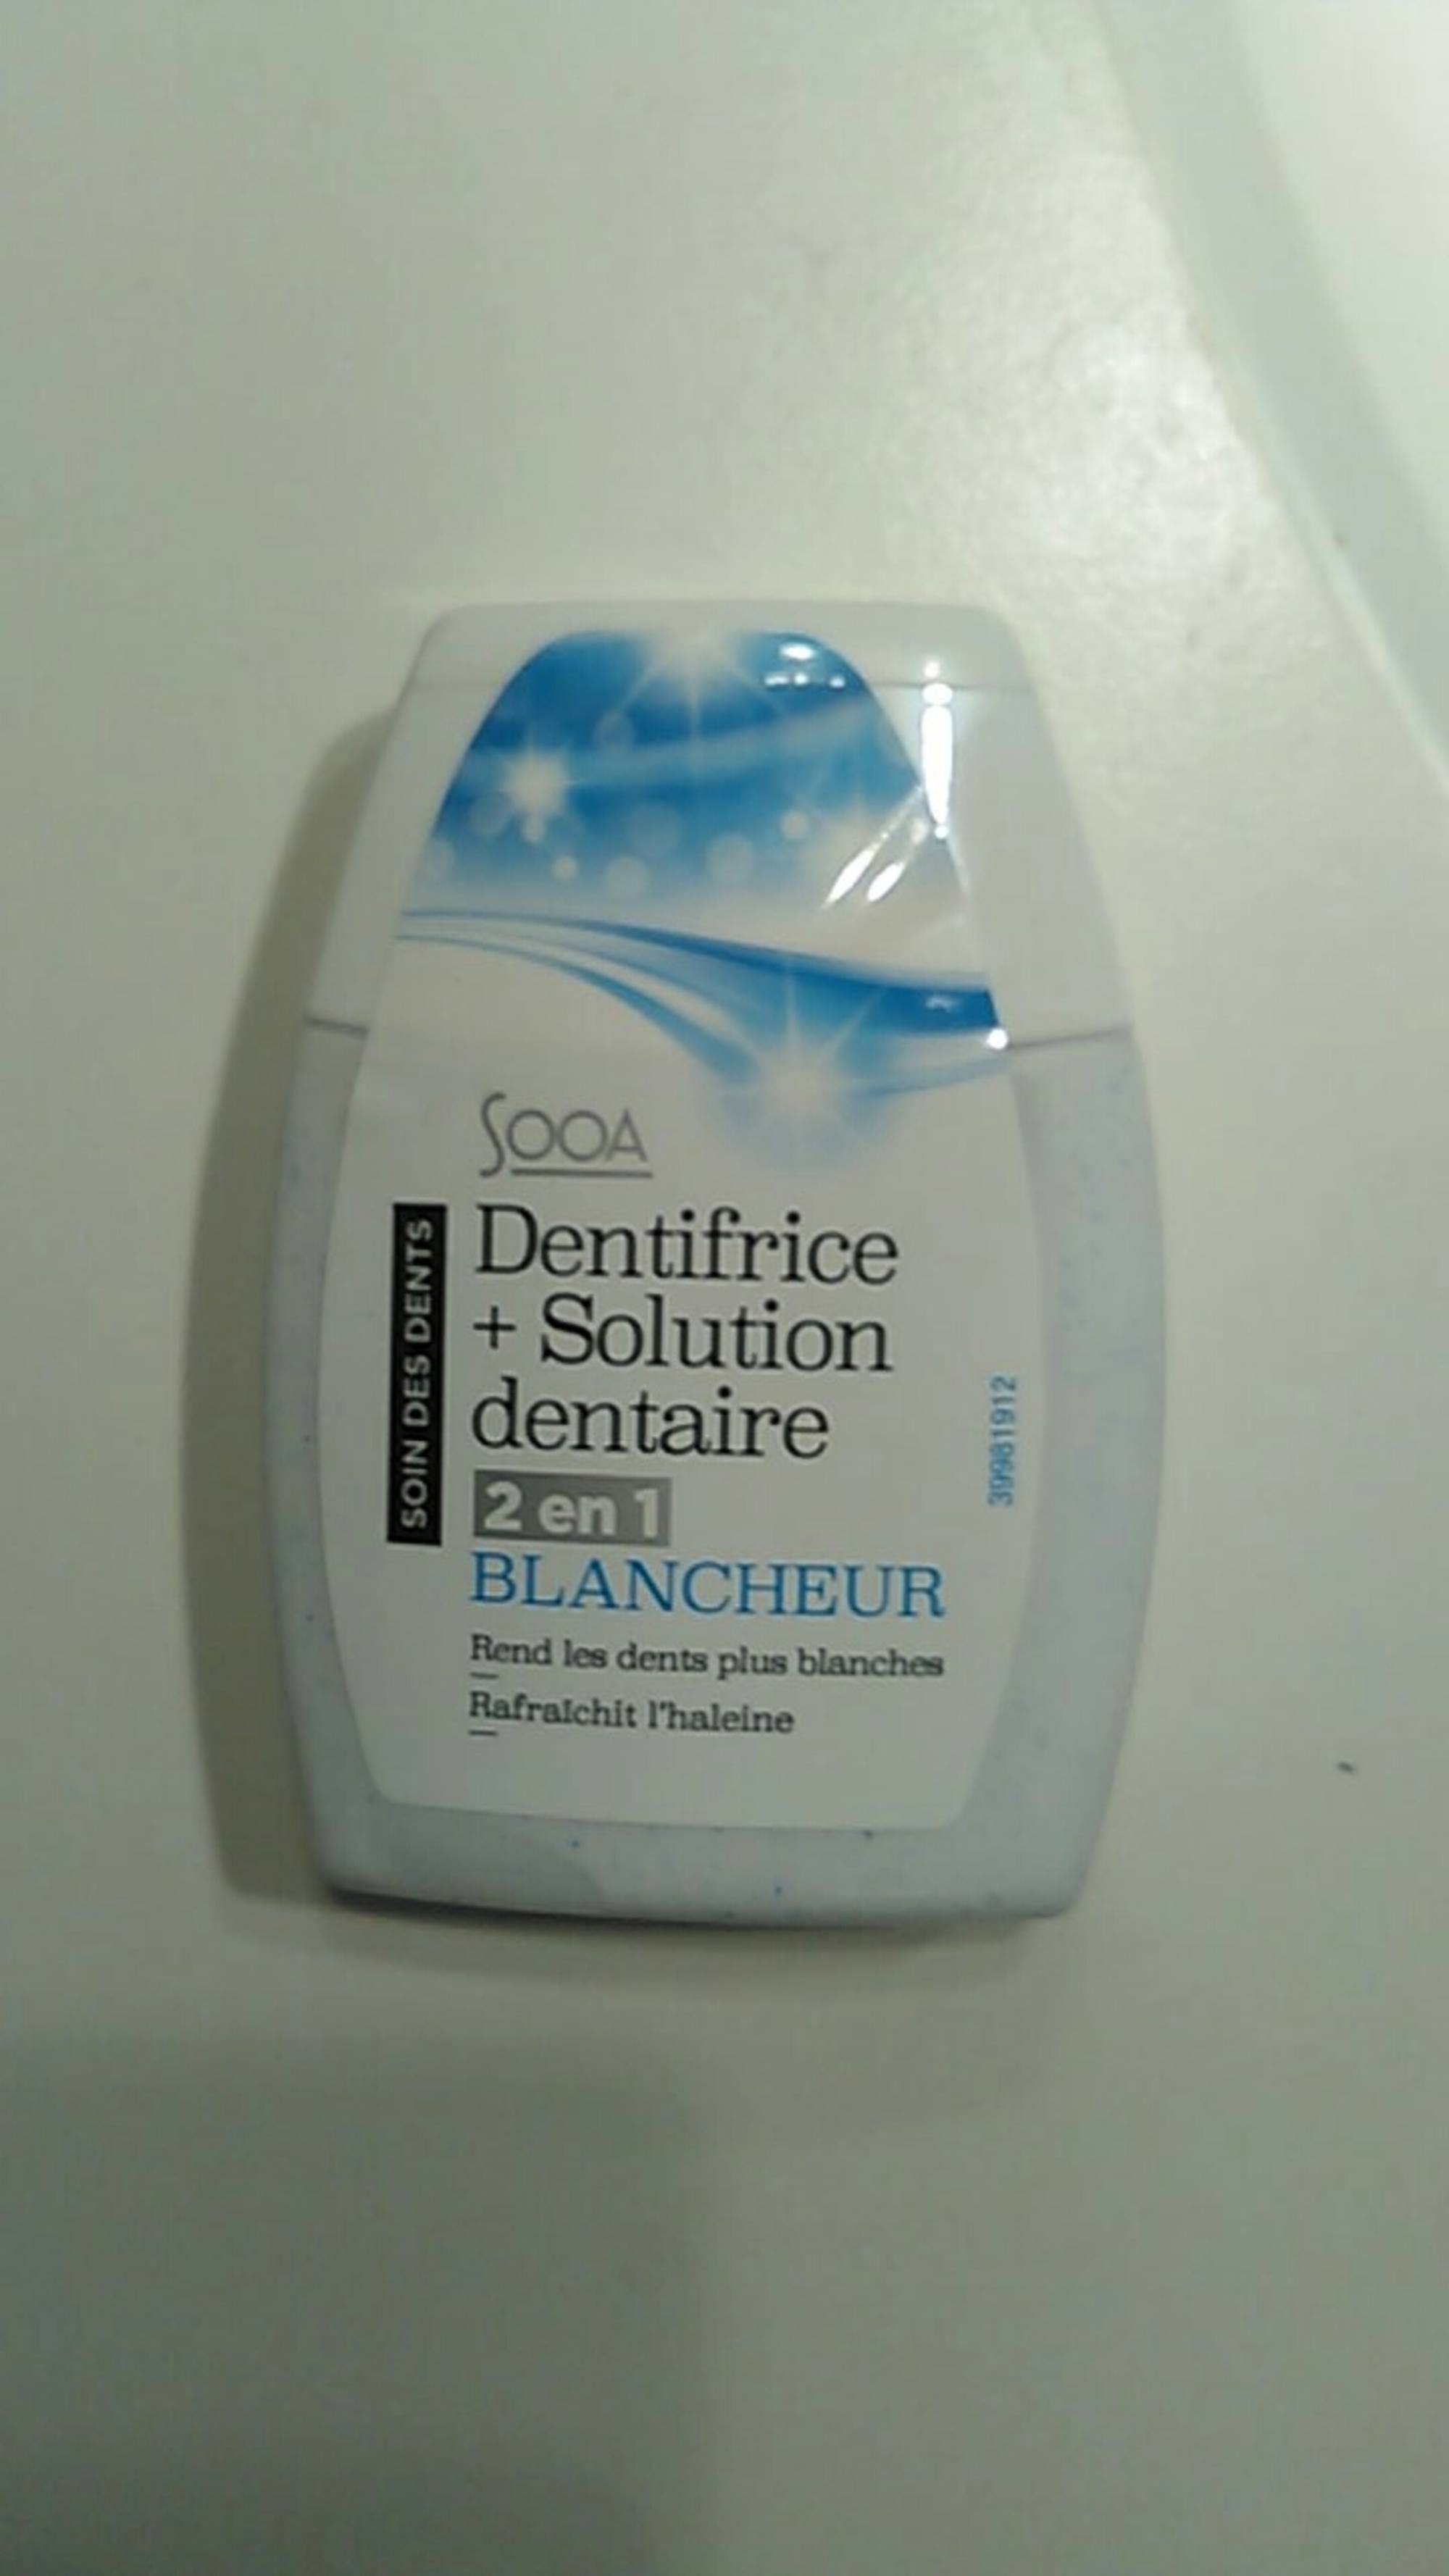 SOOA - Dentifrice + Solution dentaire - 2 en 1 blancheur